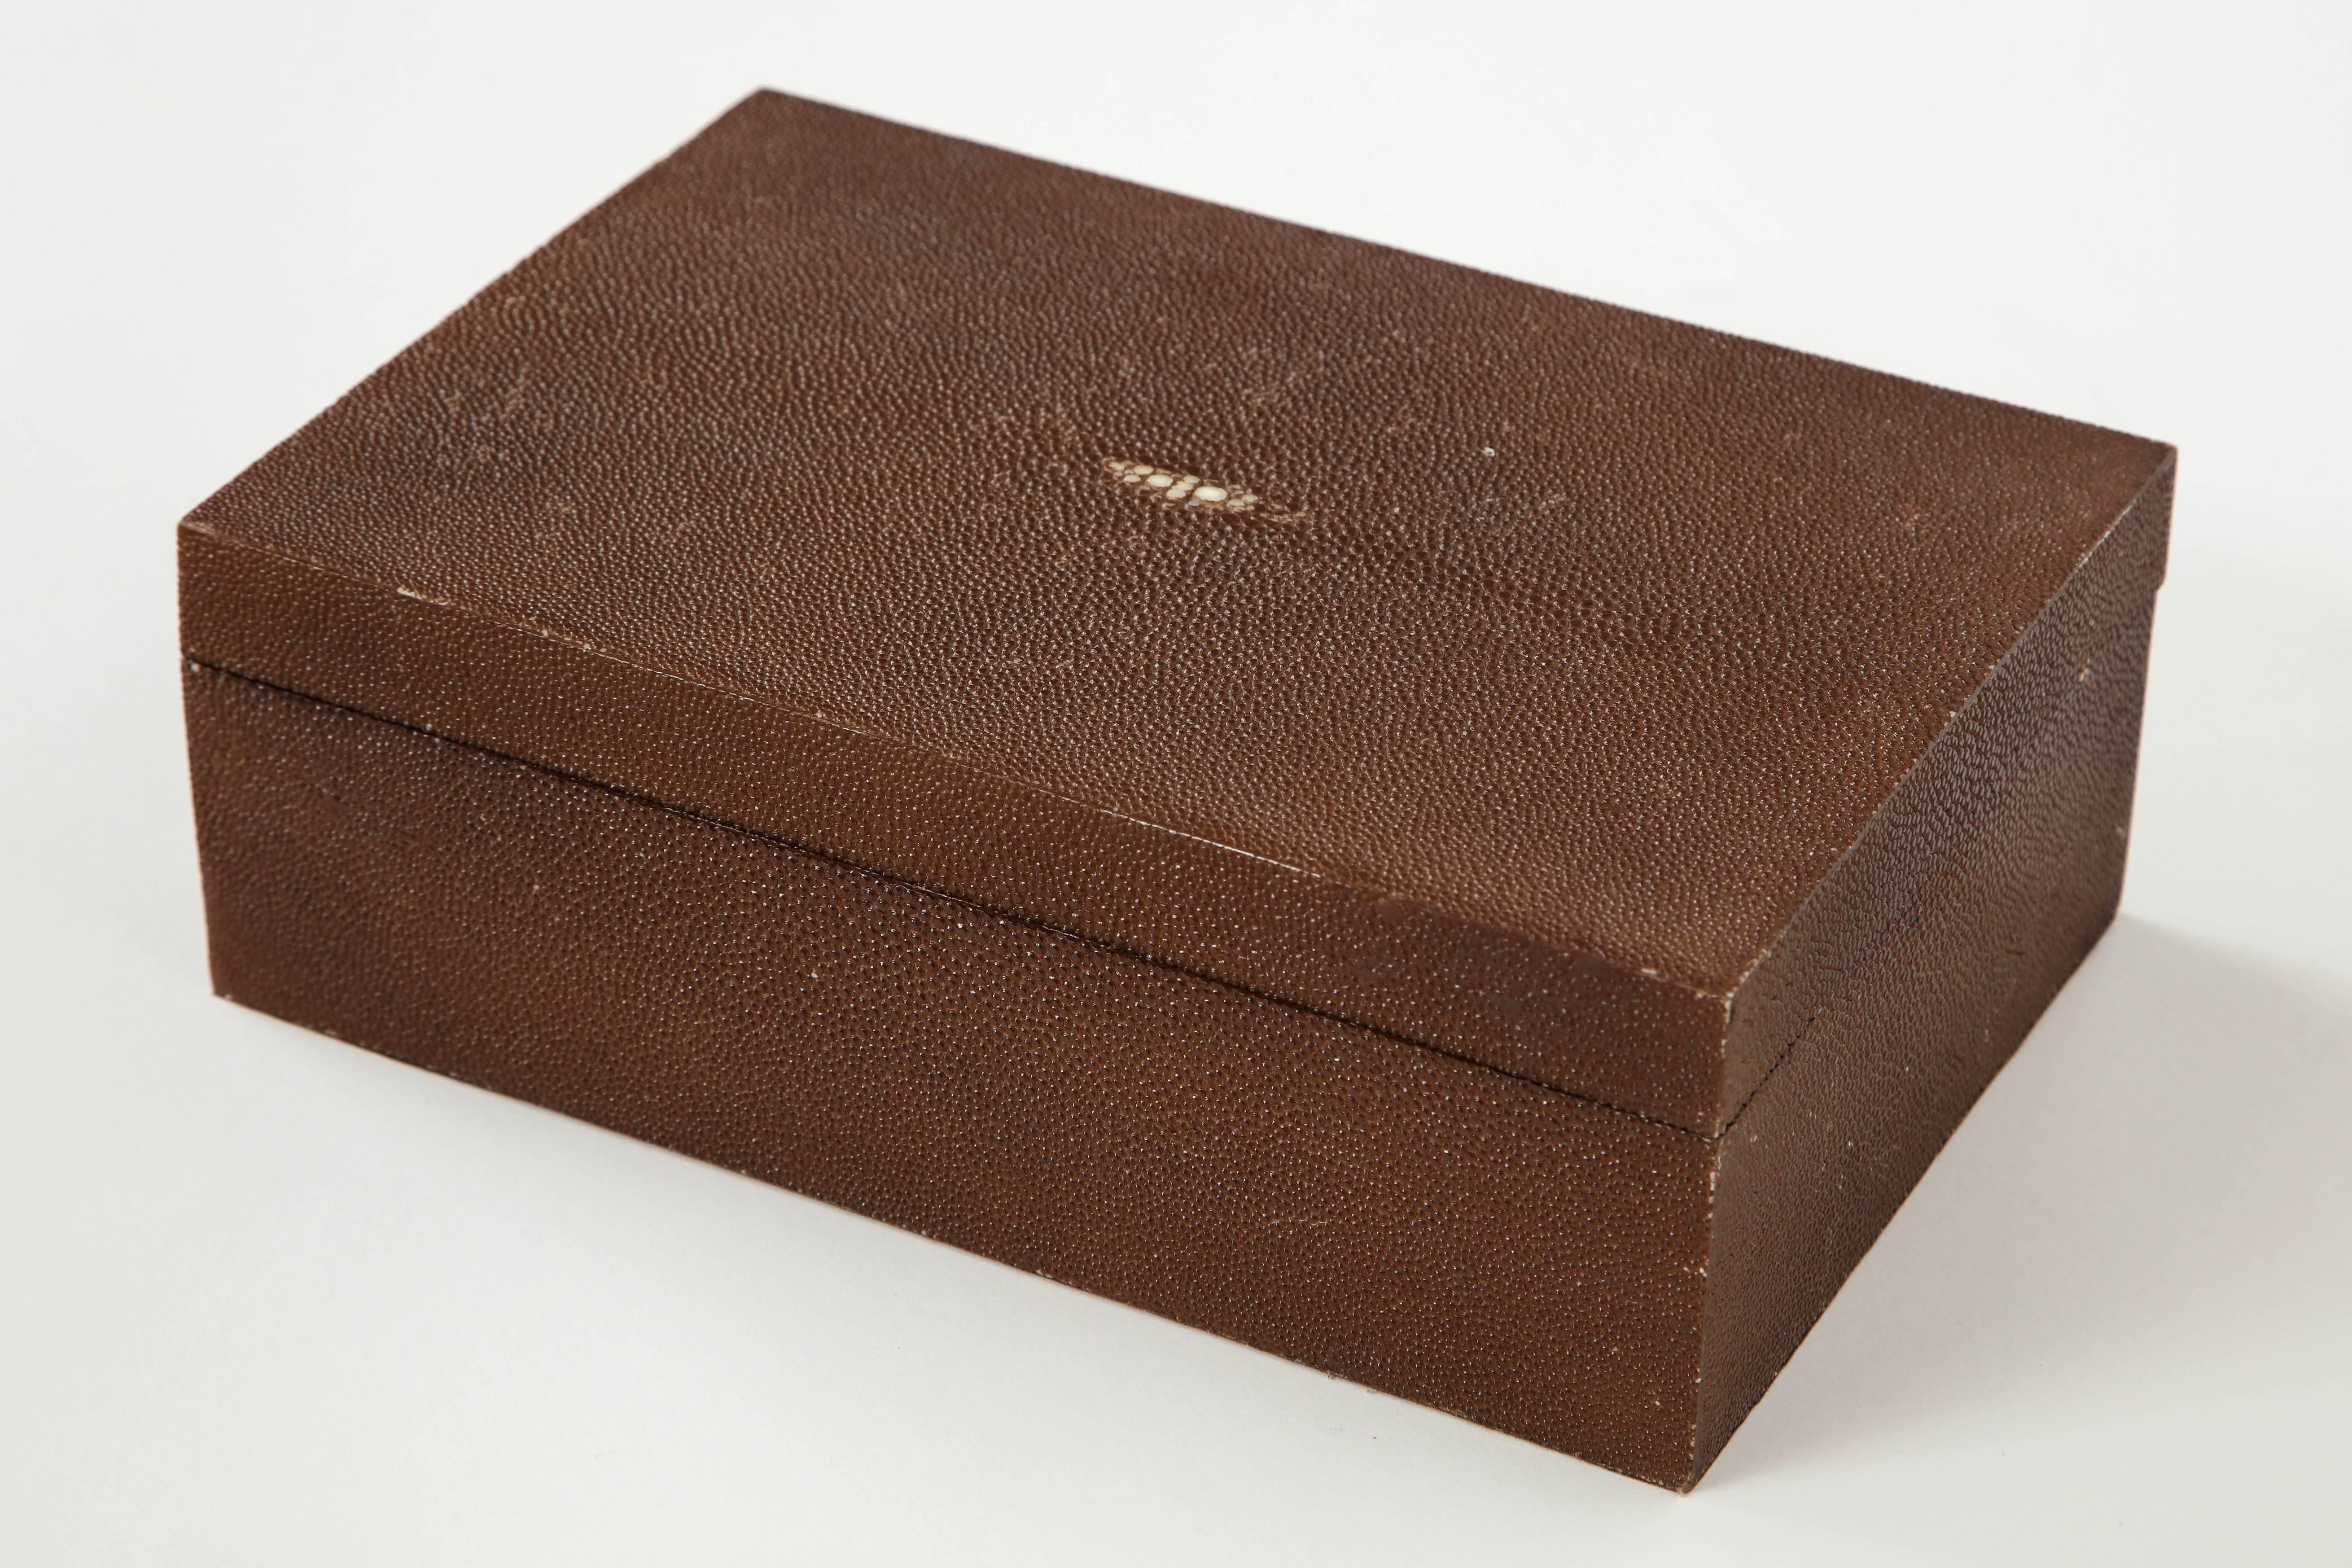 Genuine shagreen keepsake box in cocoa brown, minor wear to top.